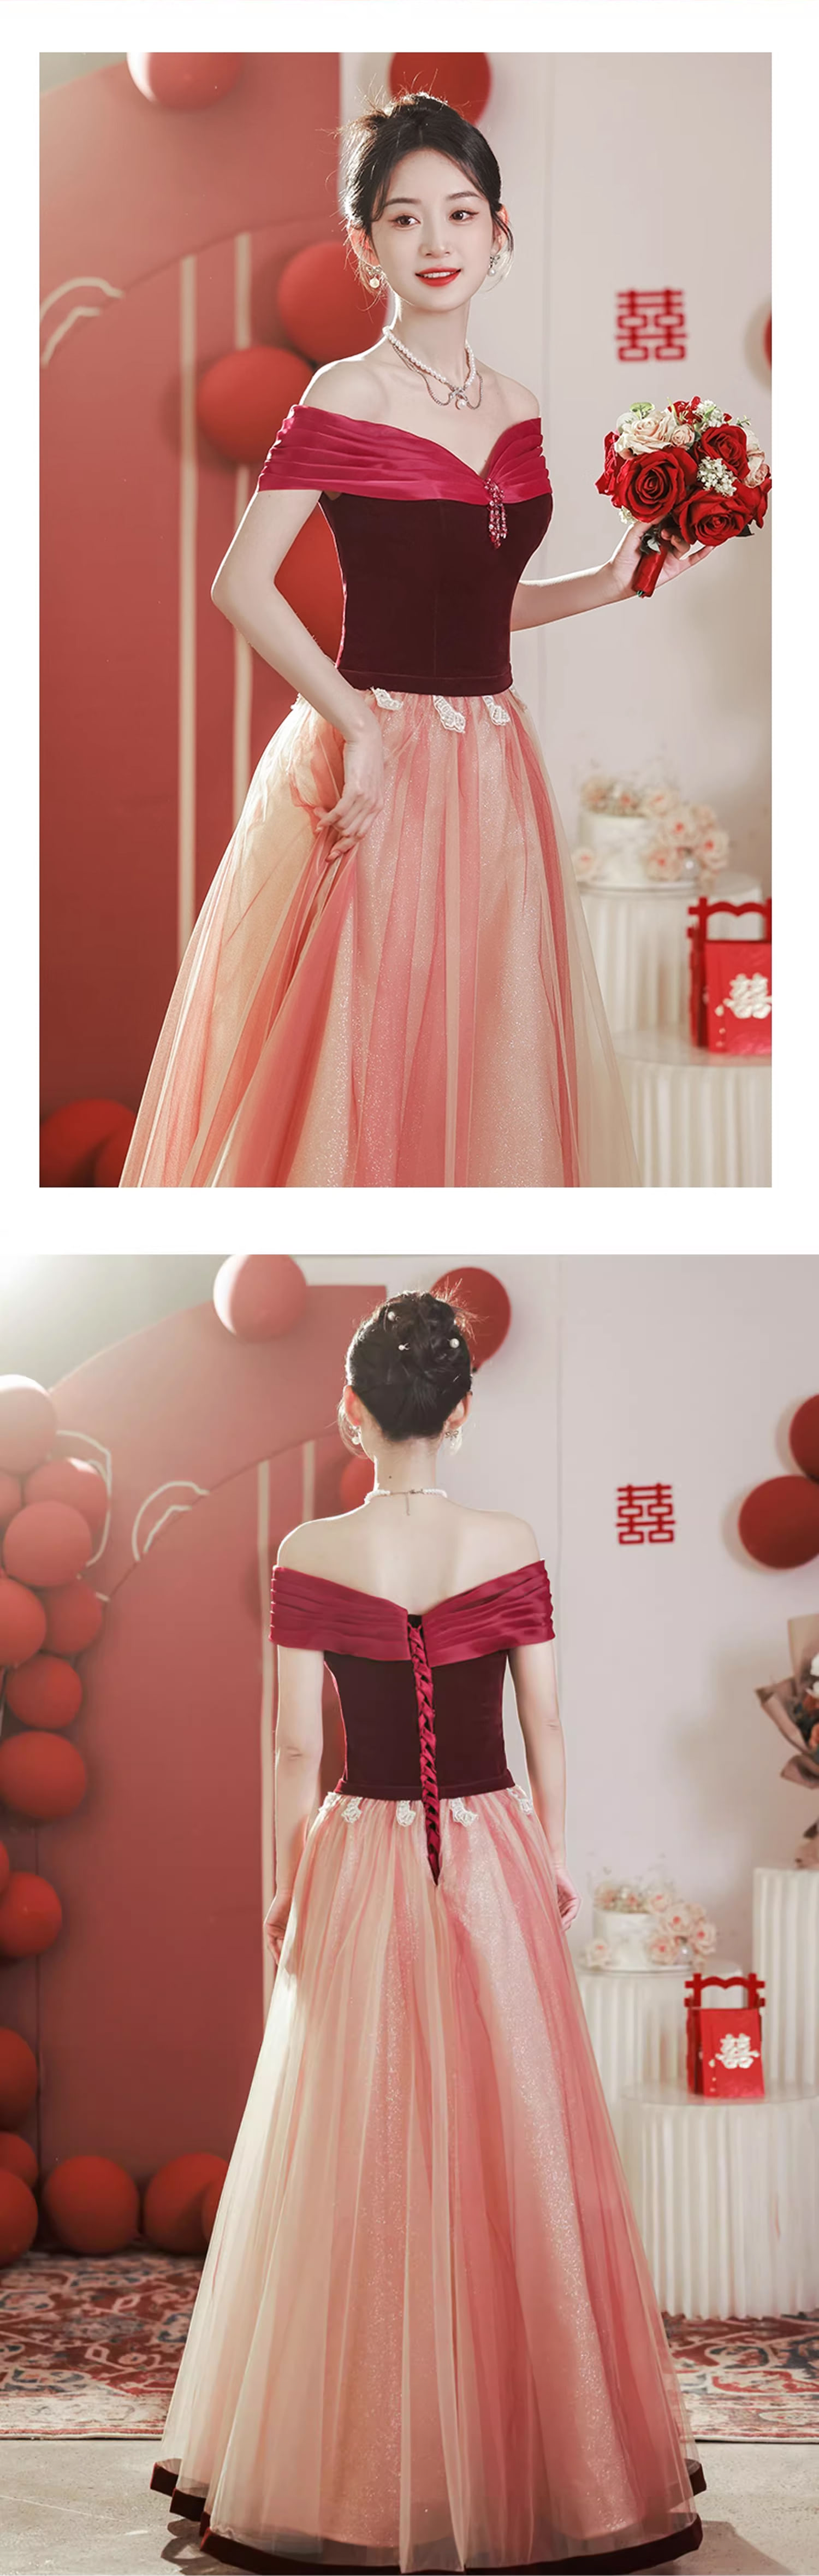 Sweet-Princess-Off-the-Shoulder-Red-Tulle-Evening-Cocktail-Formal-Dress11